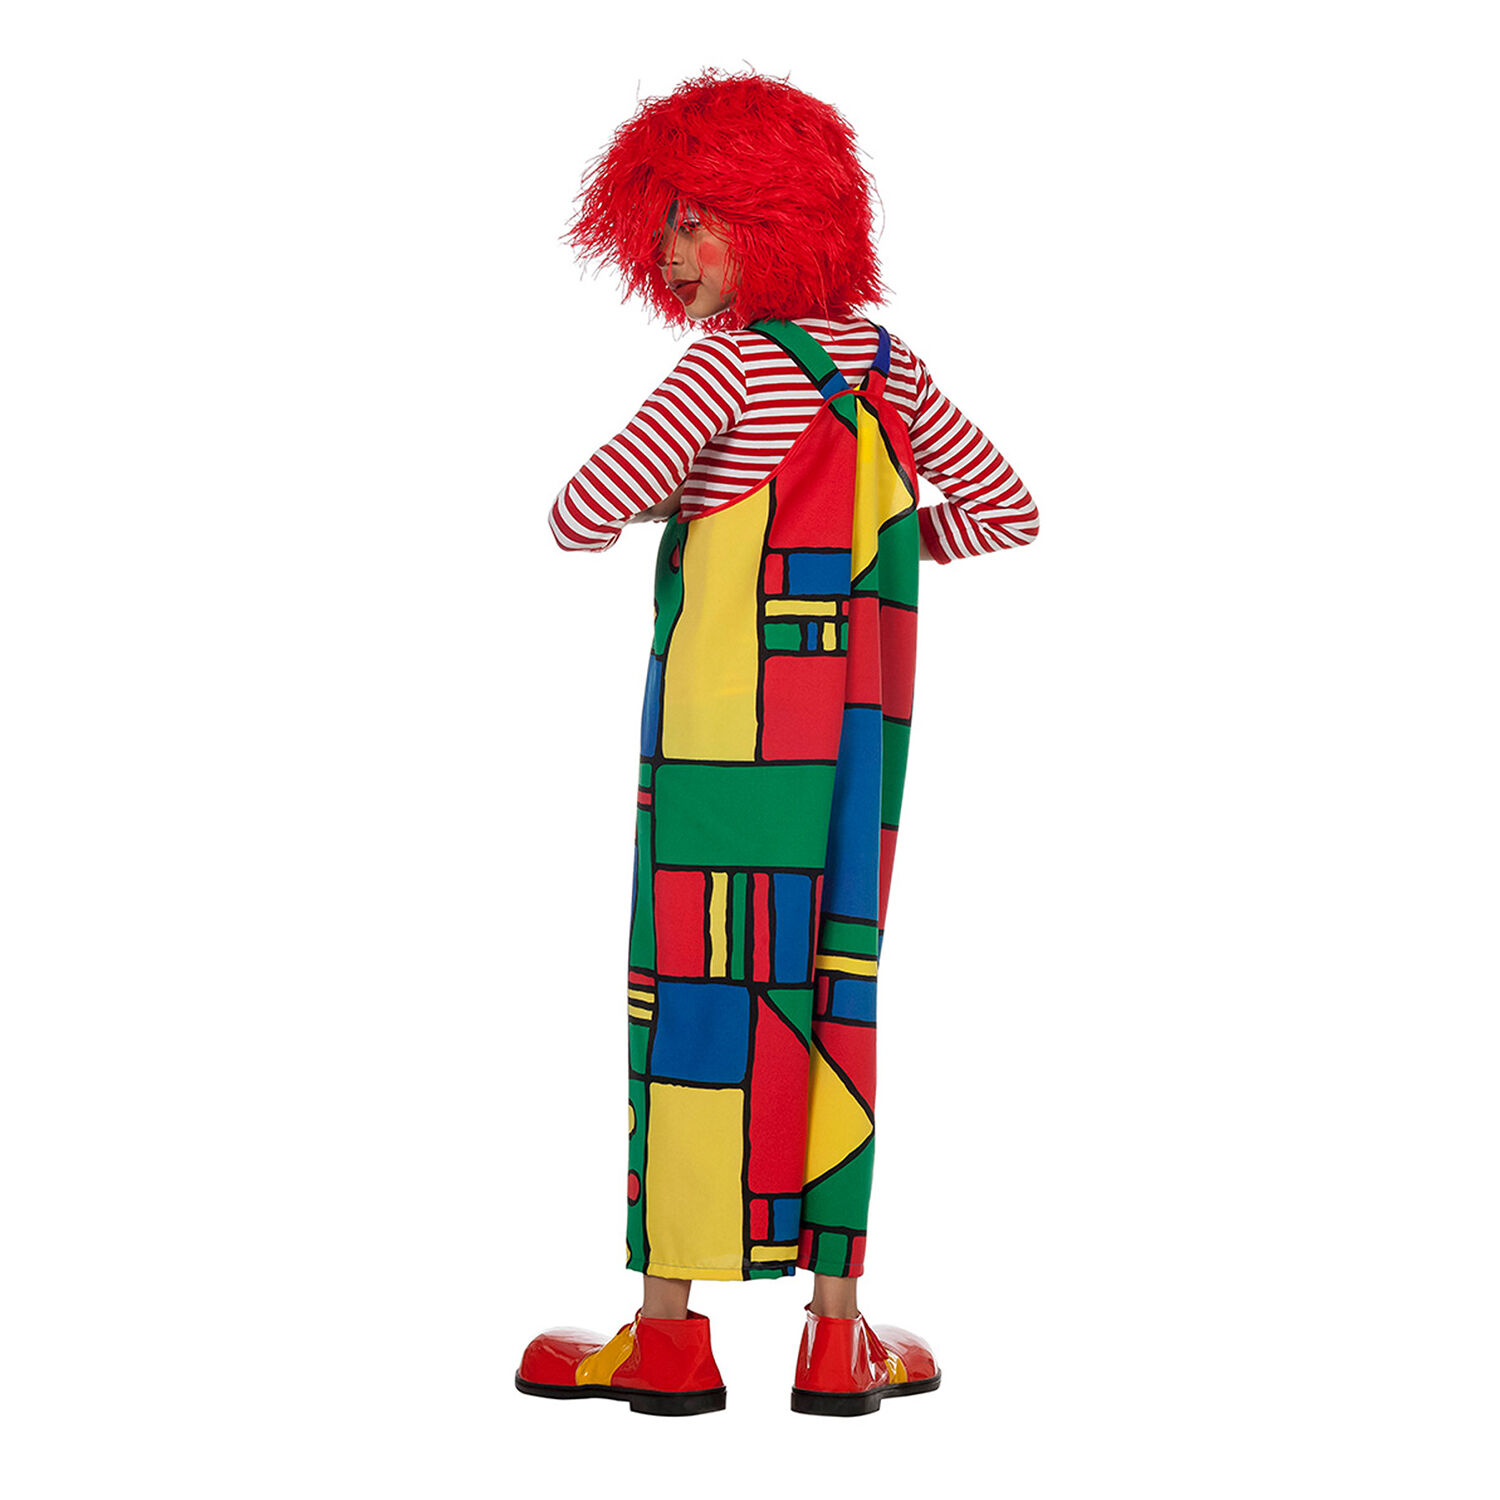 NEU Kinder-Kostüm Clown-Latzhose Mondrian, bunt, Gr. 116 Bild 3